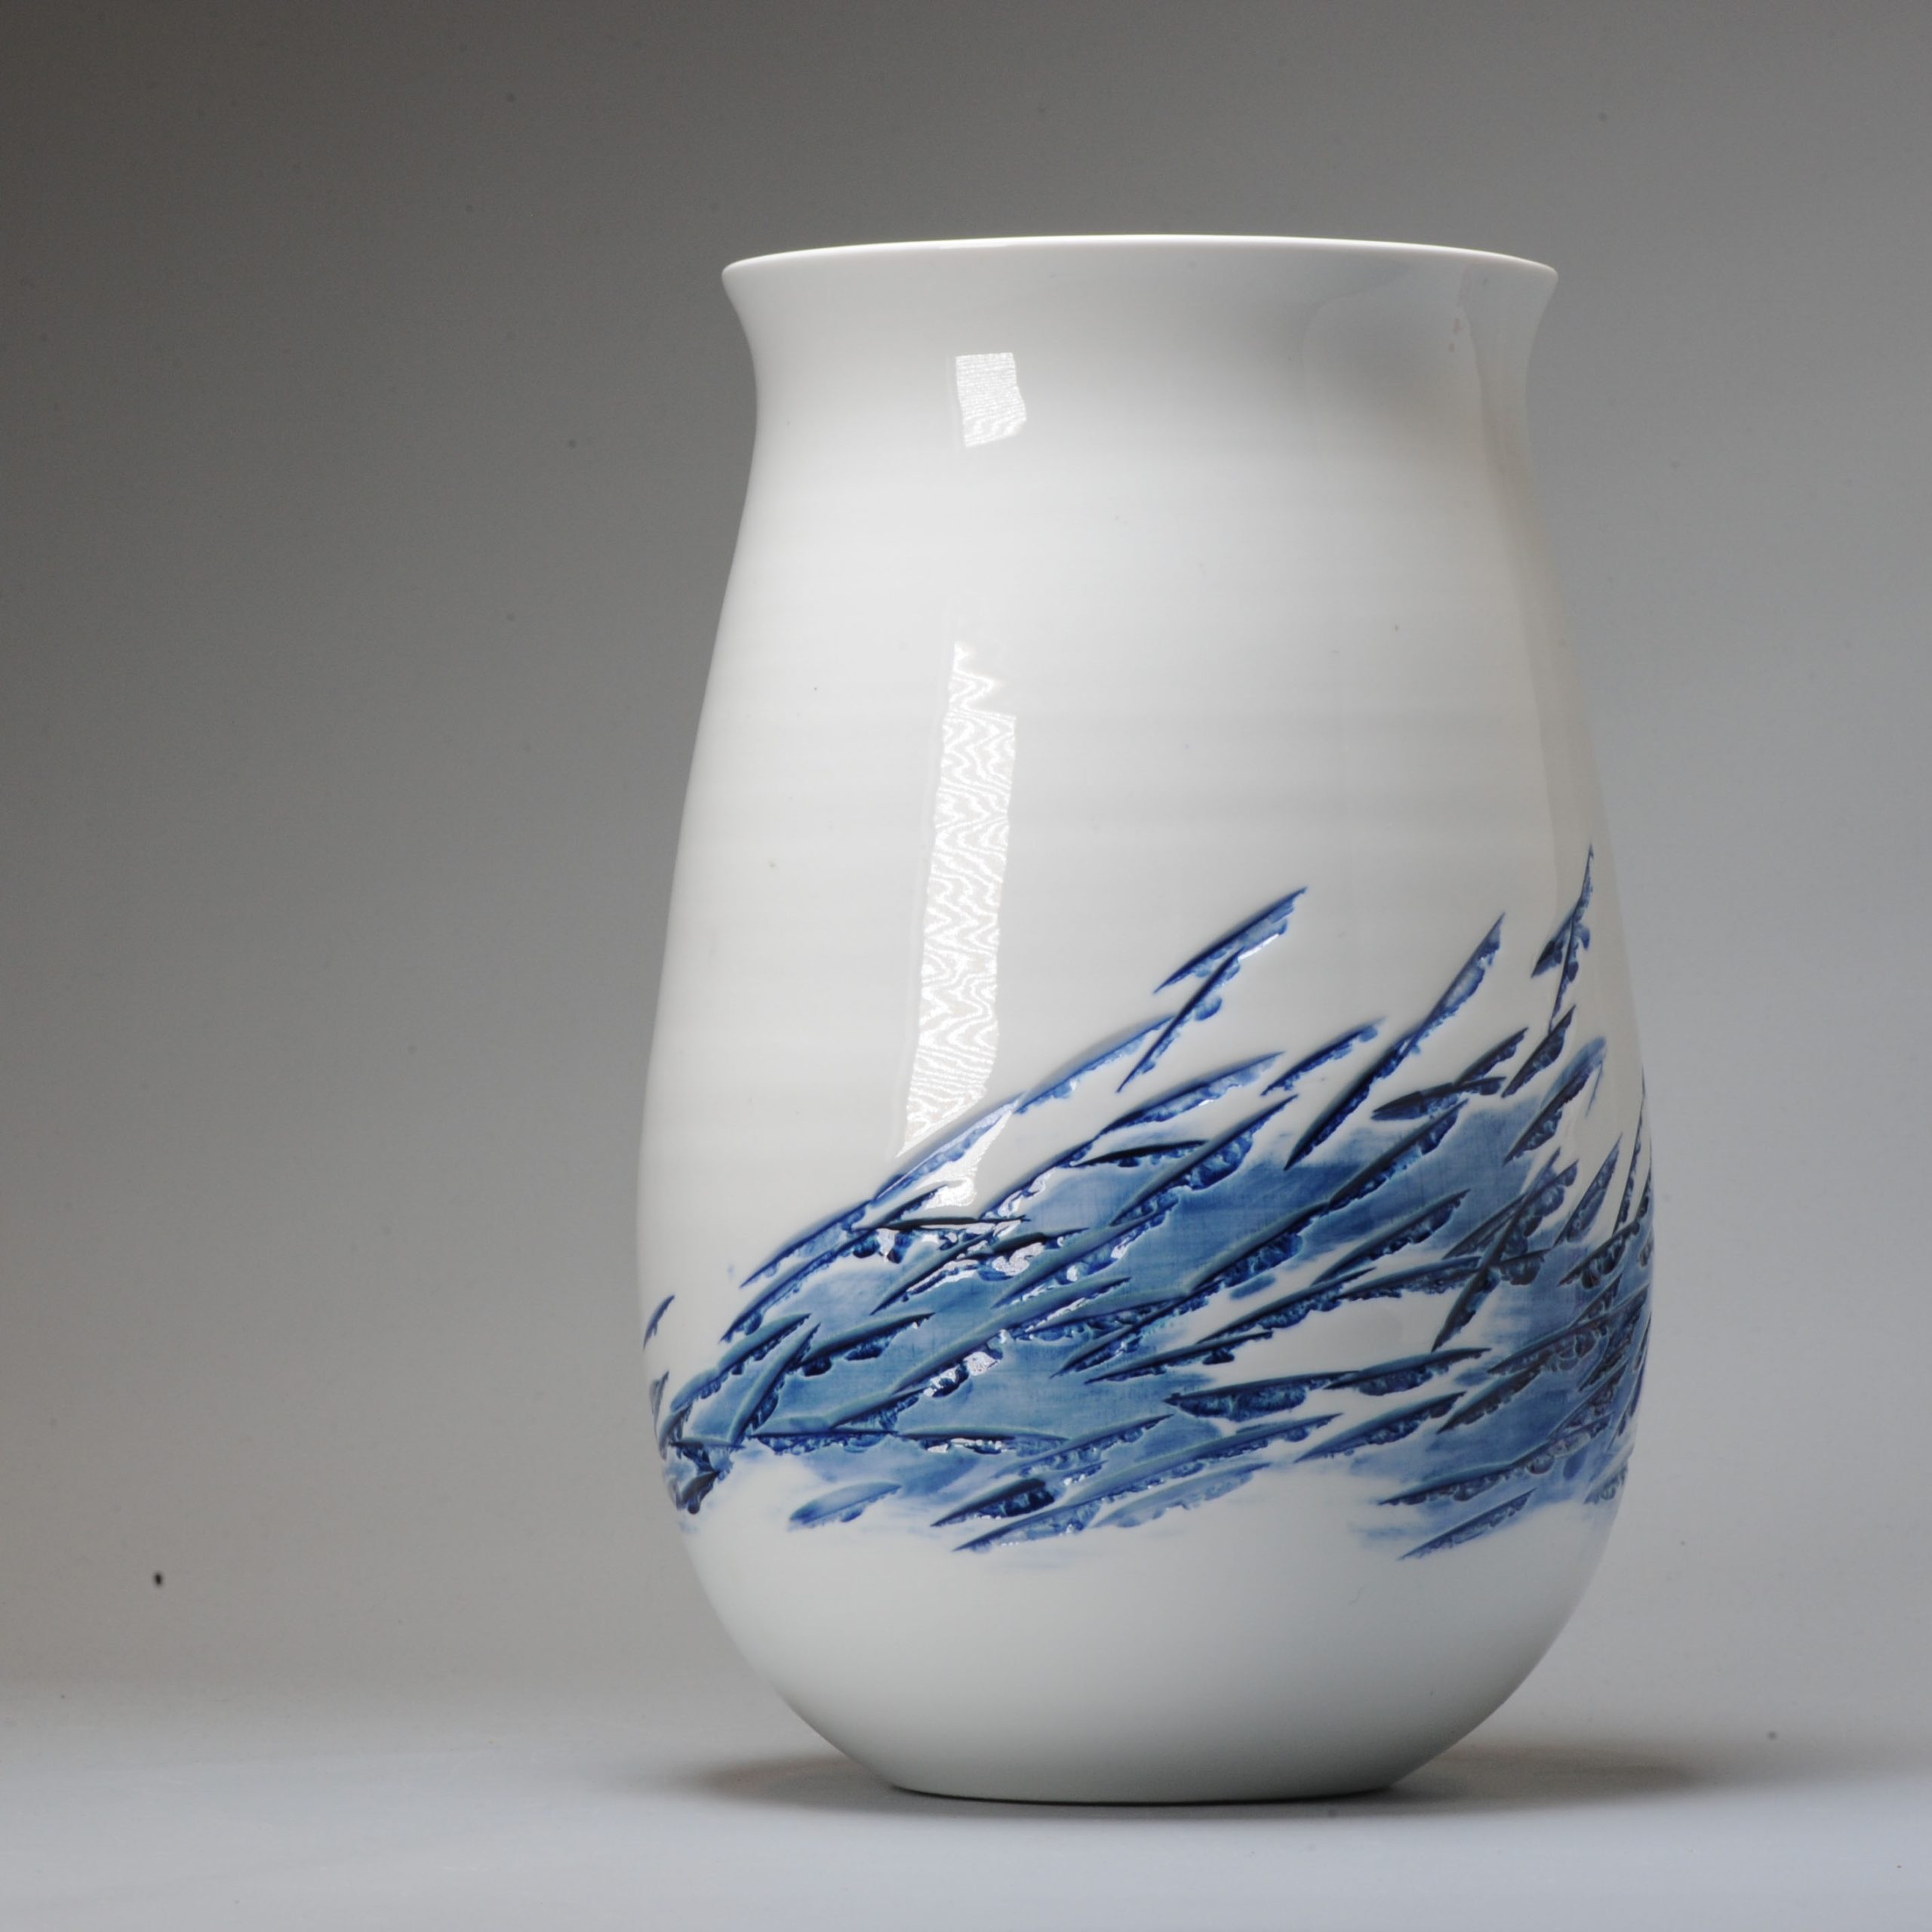 Fine Art Japanese Vase Arita. Artist Fujii Shumei Winter Landscape